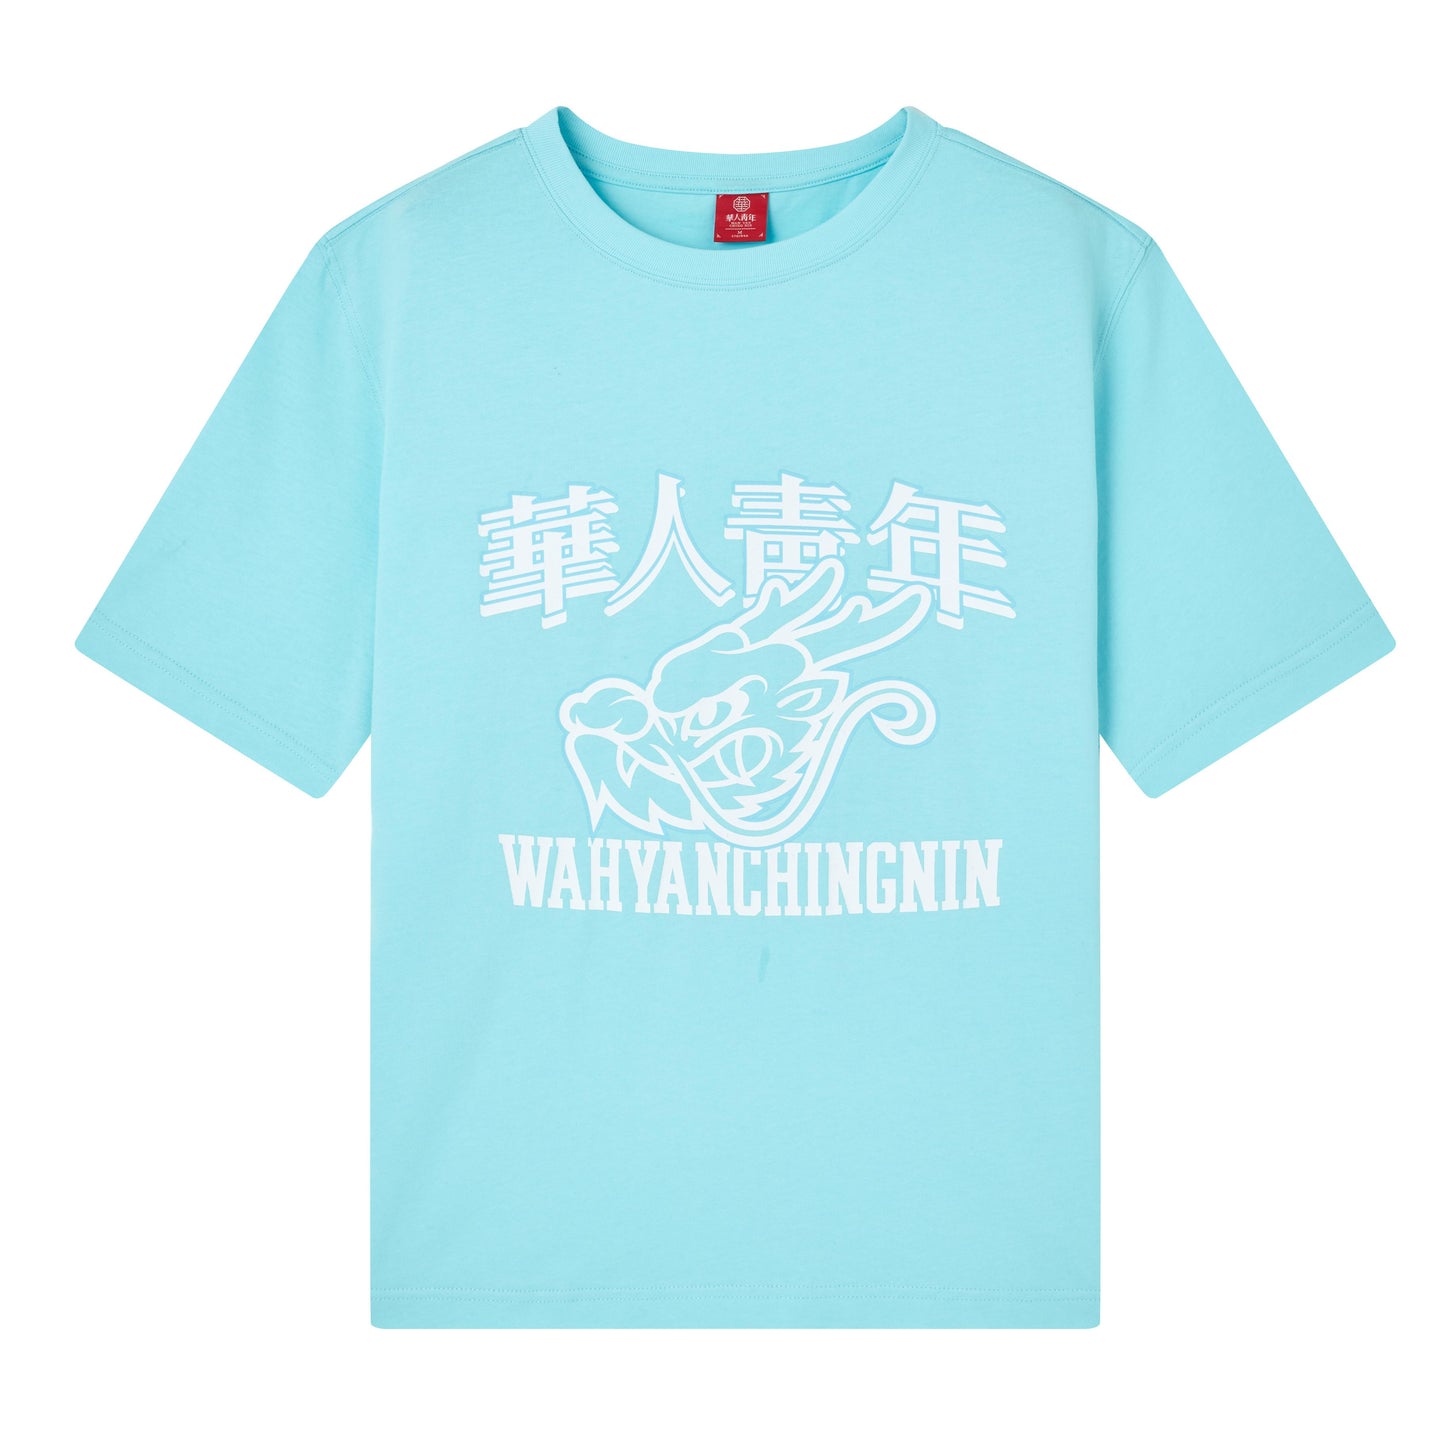 Wah Yan Ching Nin Dragon Print Tee